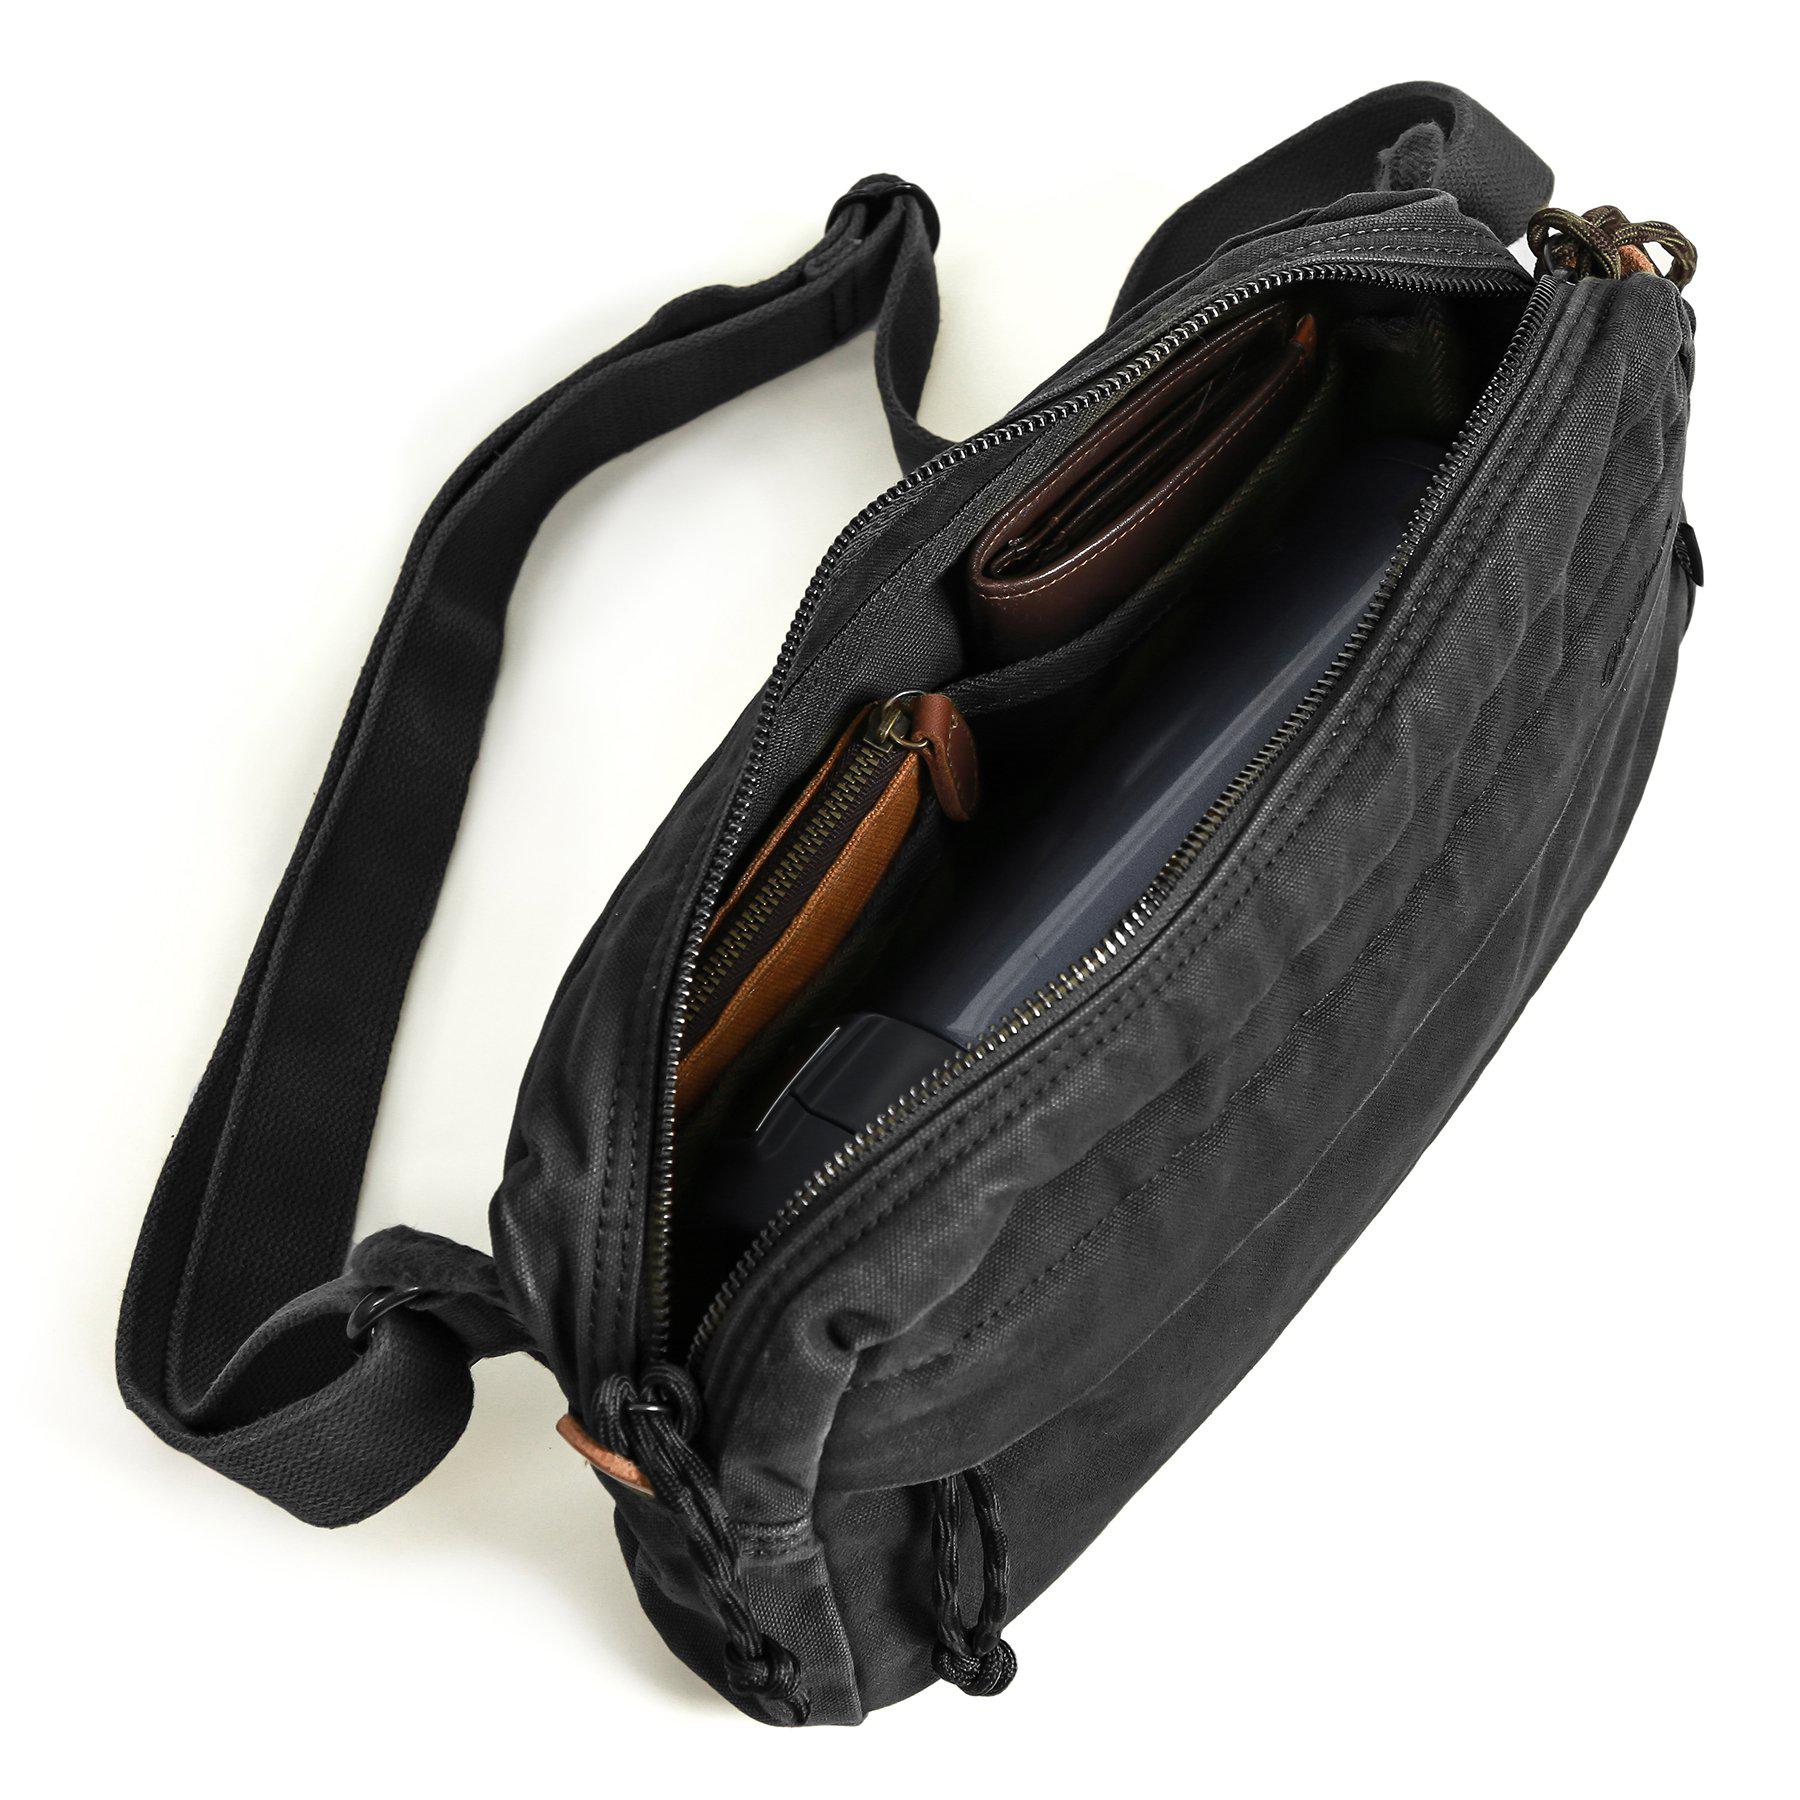 Gootium Canvas Messenger Bags #30624 Black